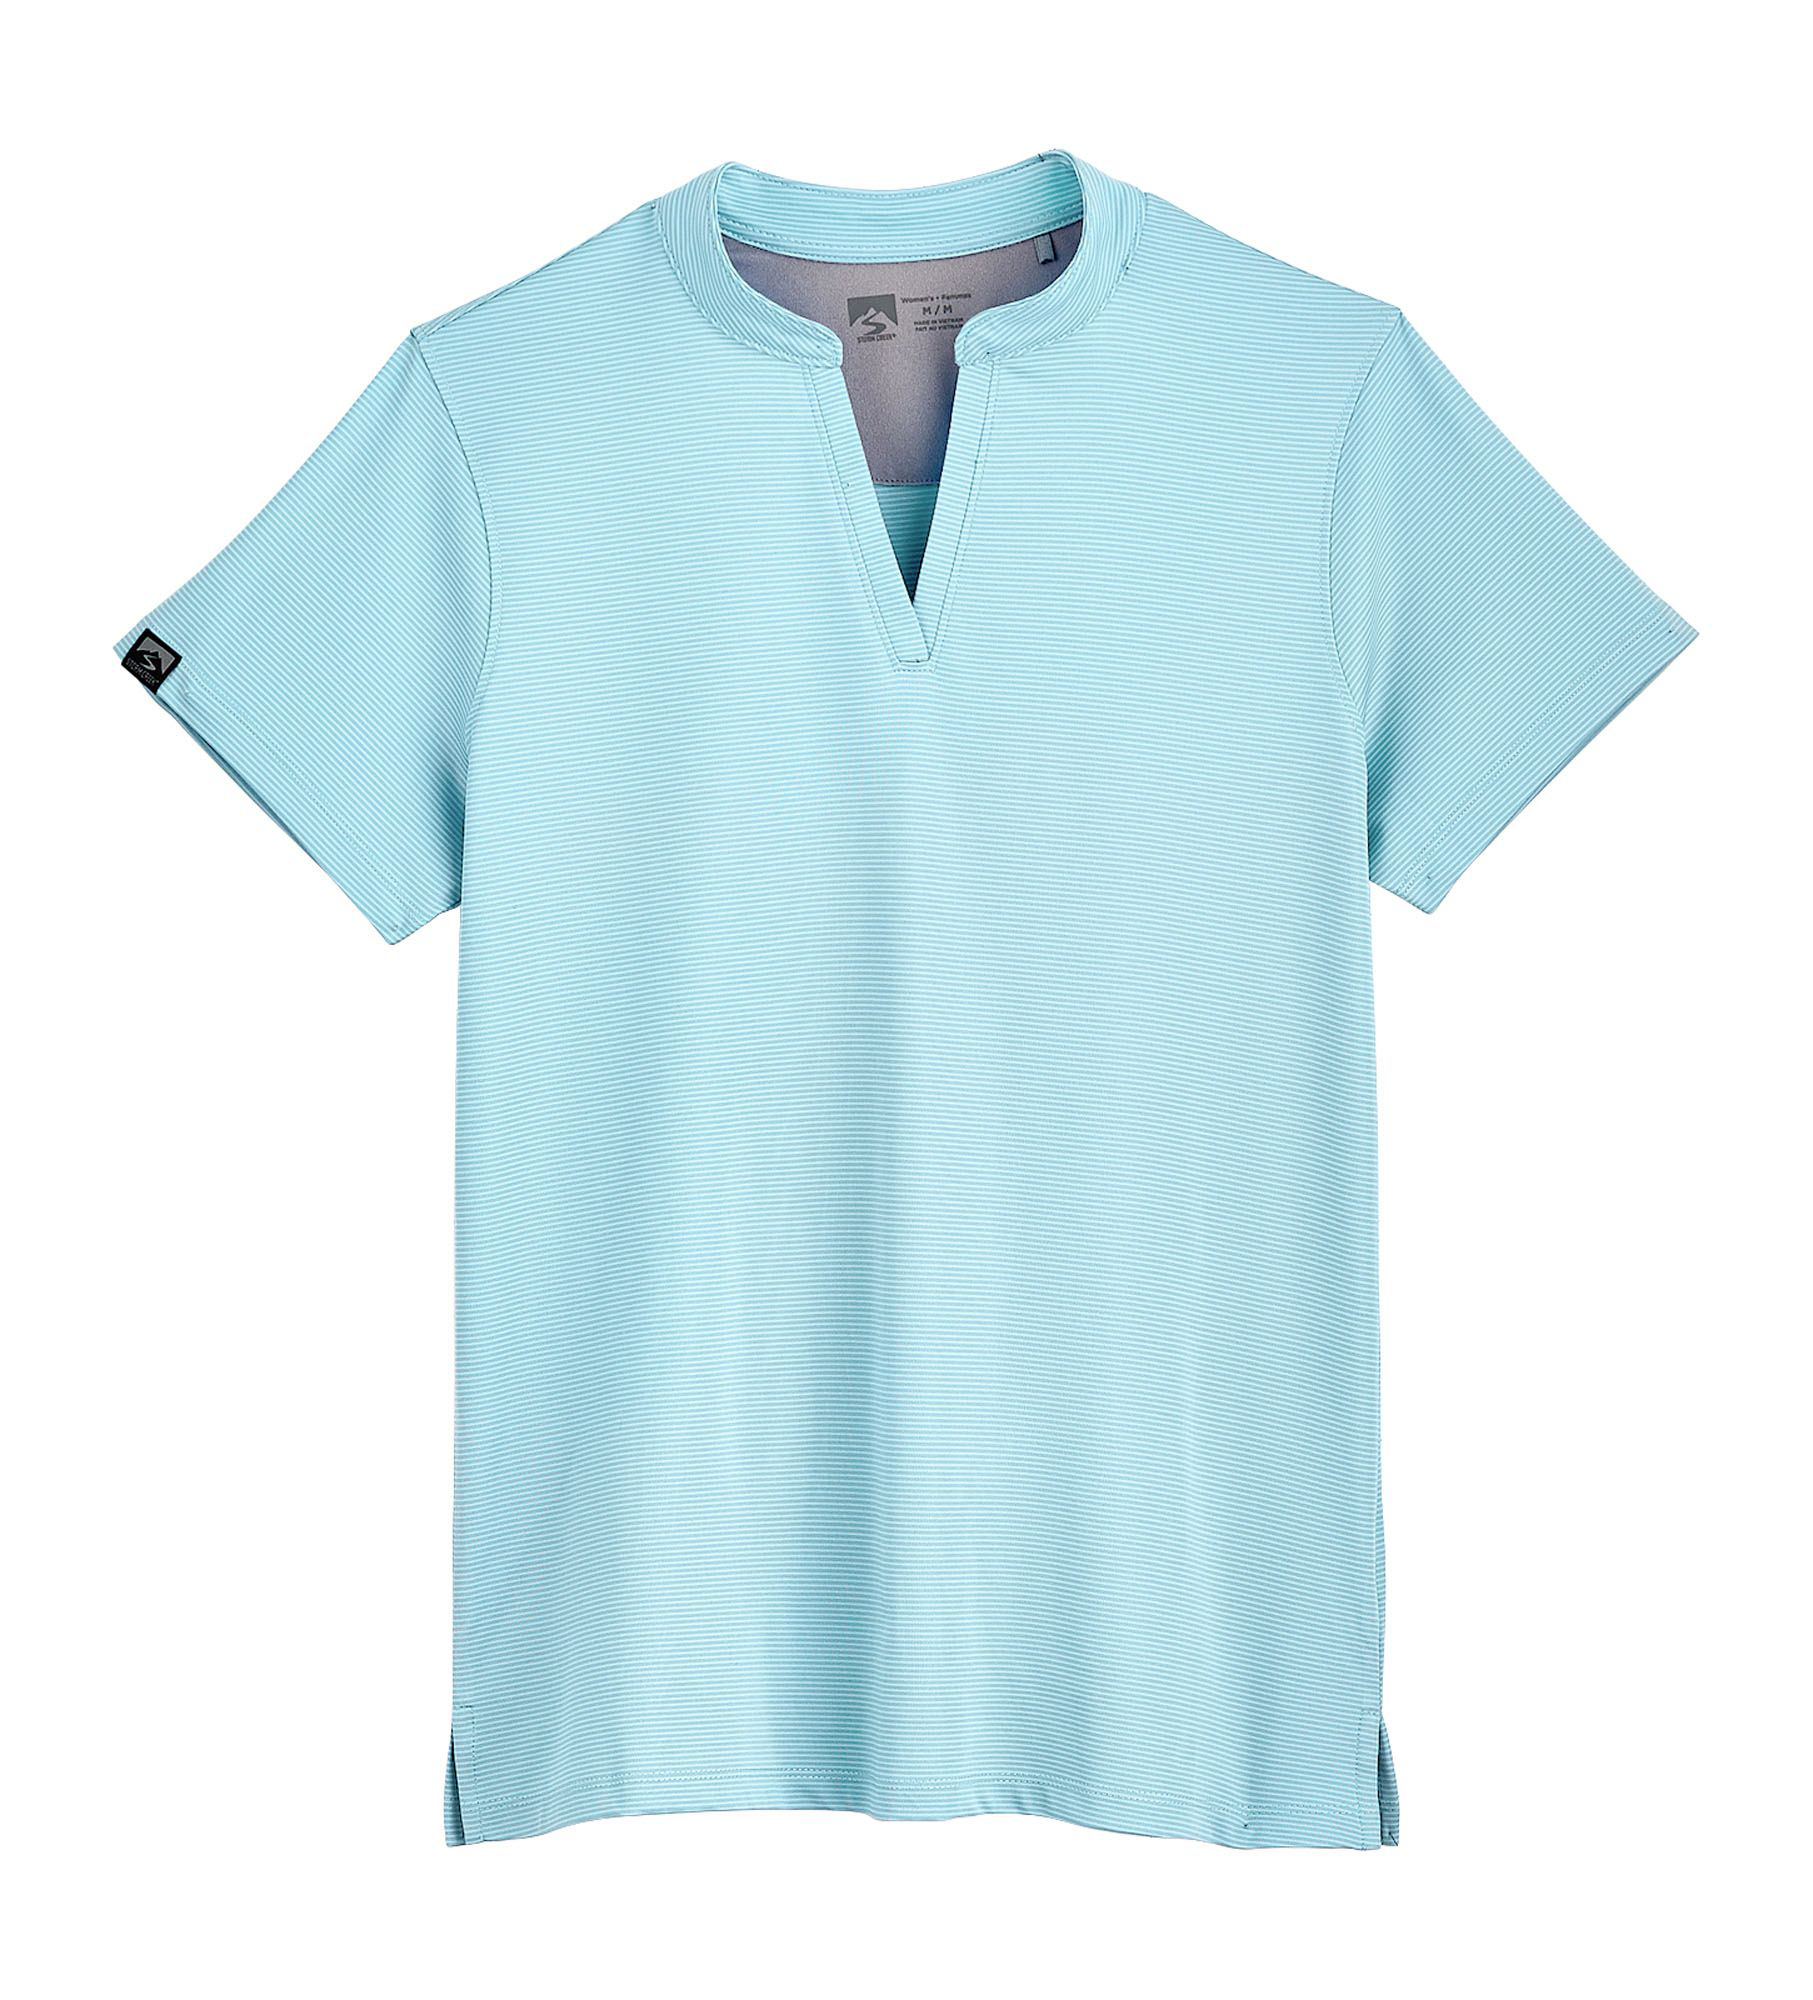 Storm Creek Optimist Short-Sleeve Polo Shirt for Ladies - Glacier Blue - M